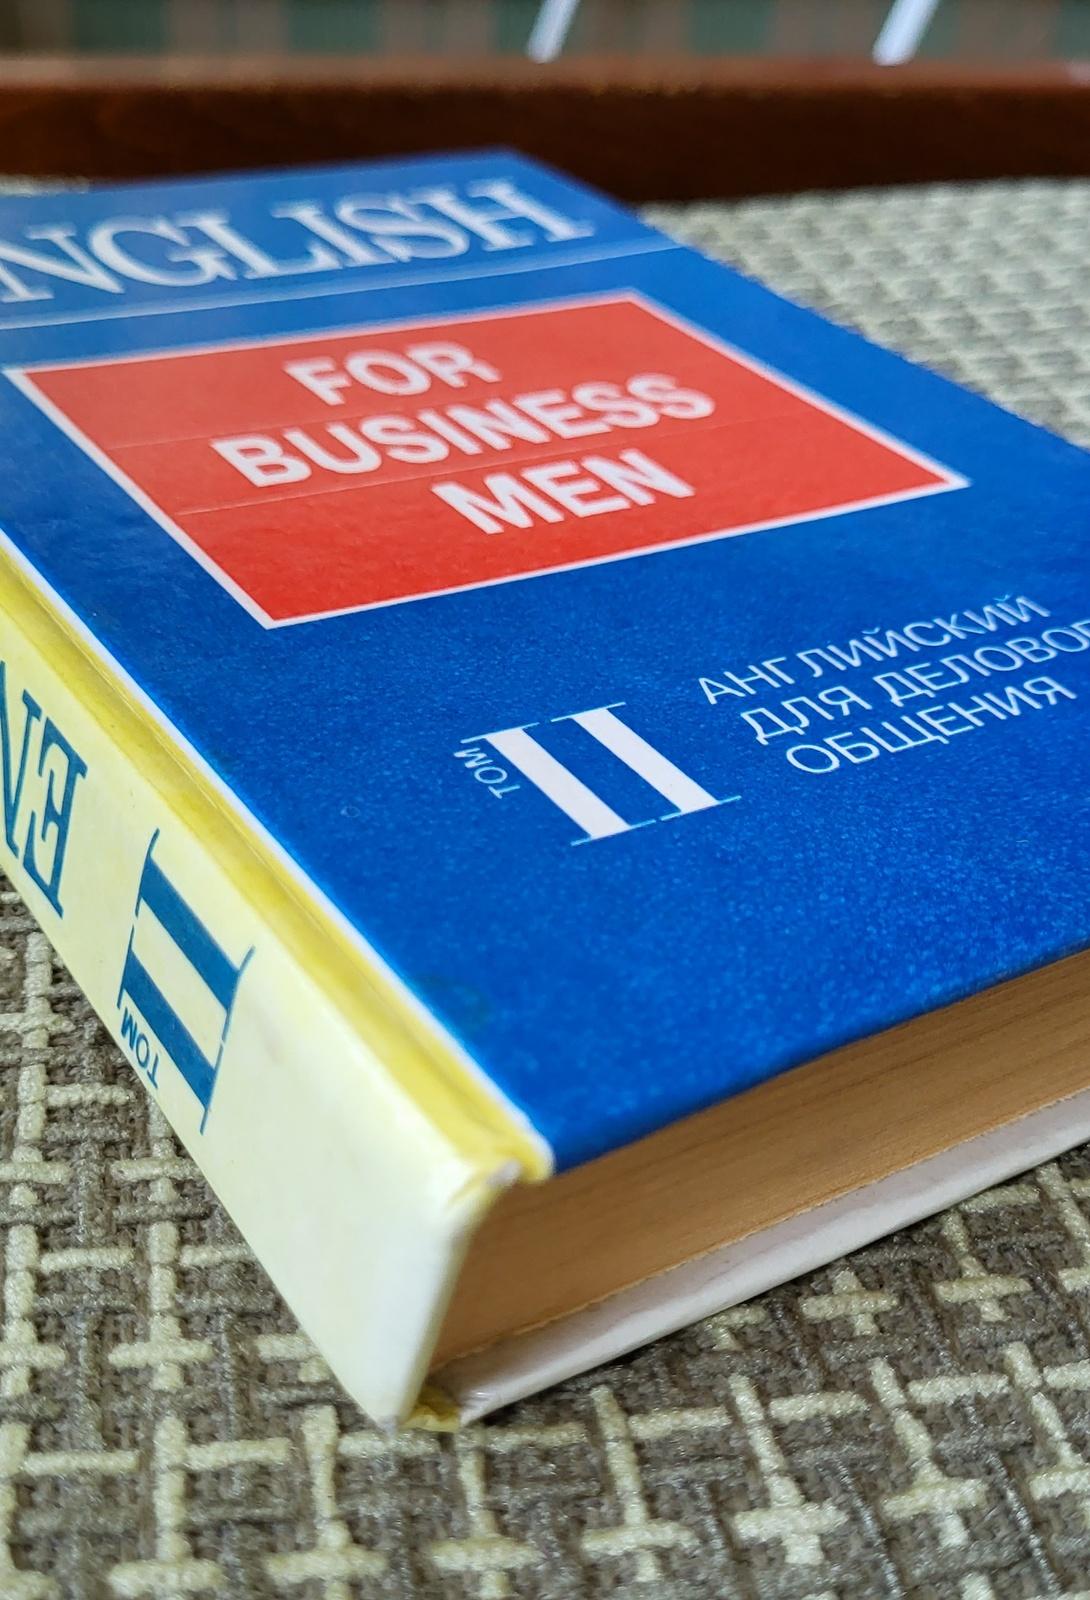 Mastering Business English: Vintage Study Book - 'For Business Men' Part 2, 1J27 6